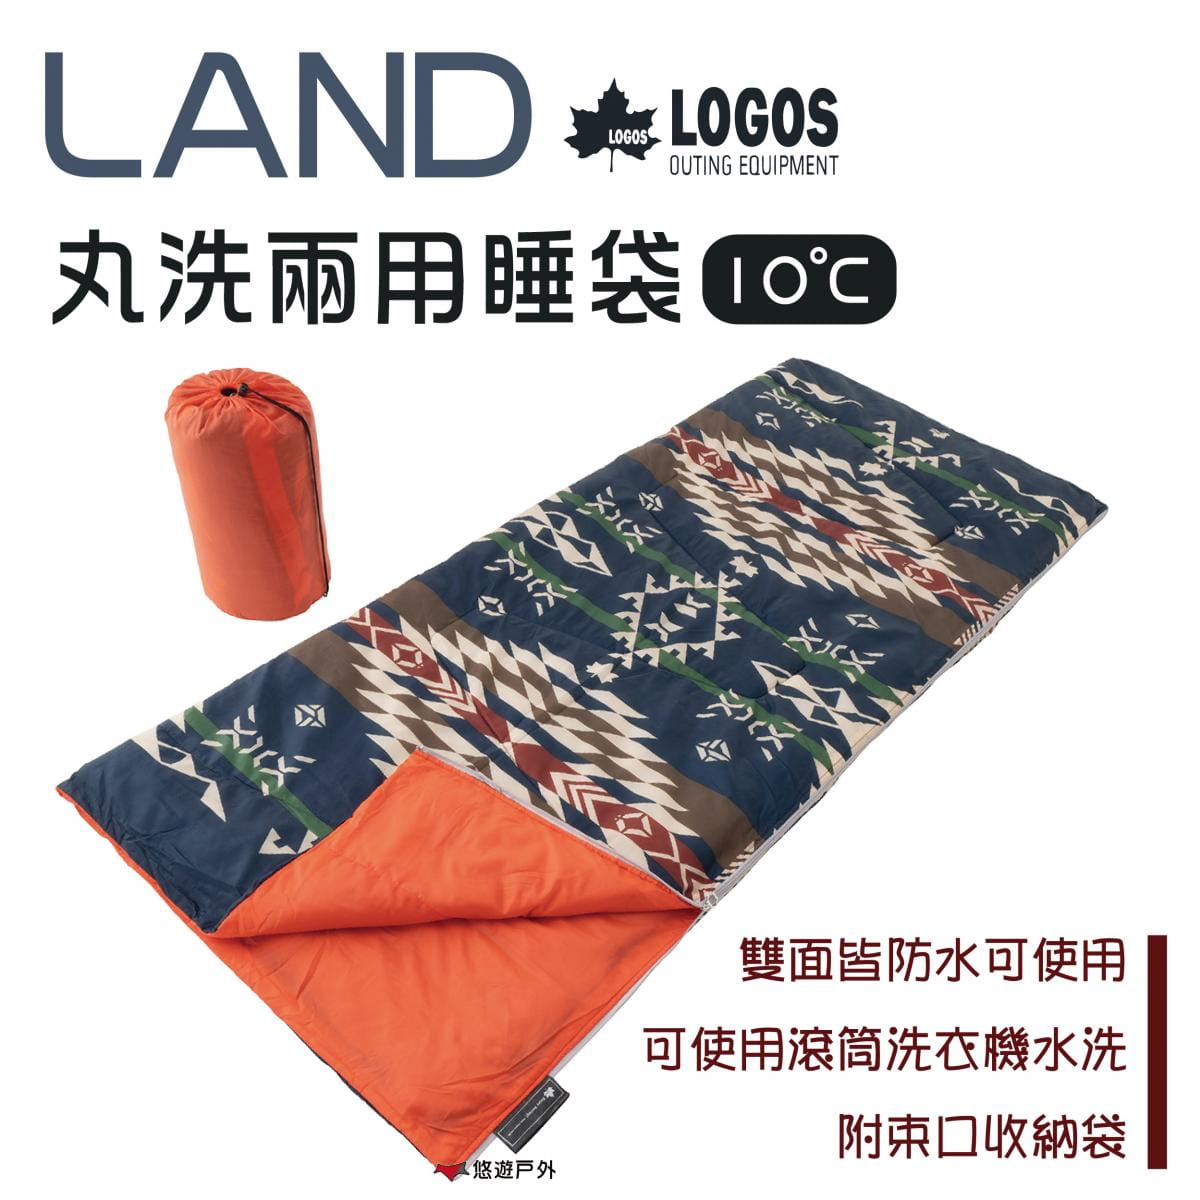 【LOGOS】LAND 丸洗兩用睡袋10℃_LG72600011 (悠遊戶外) 0